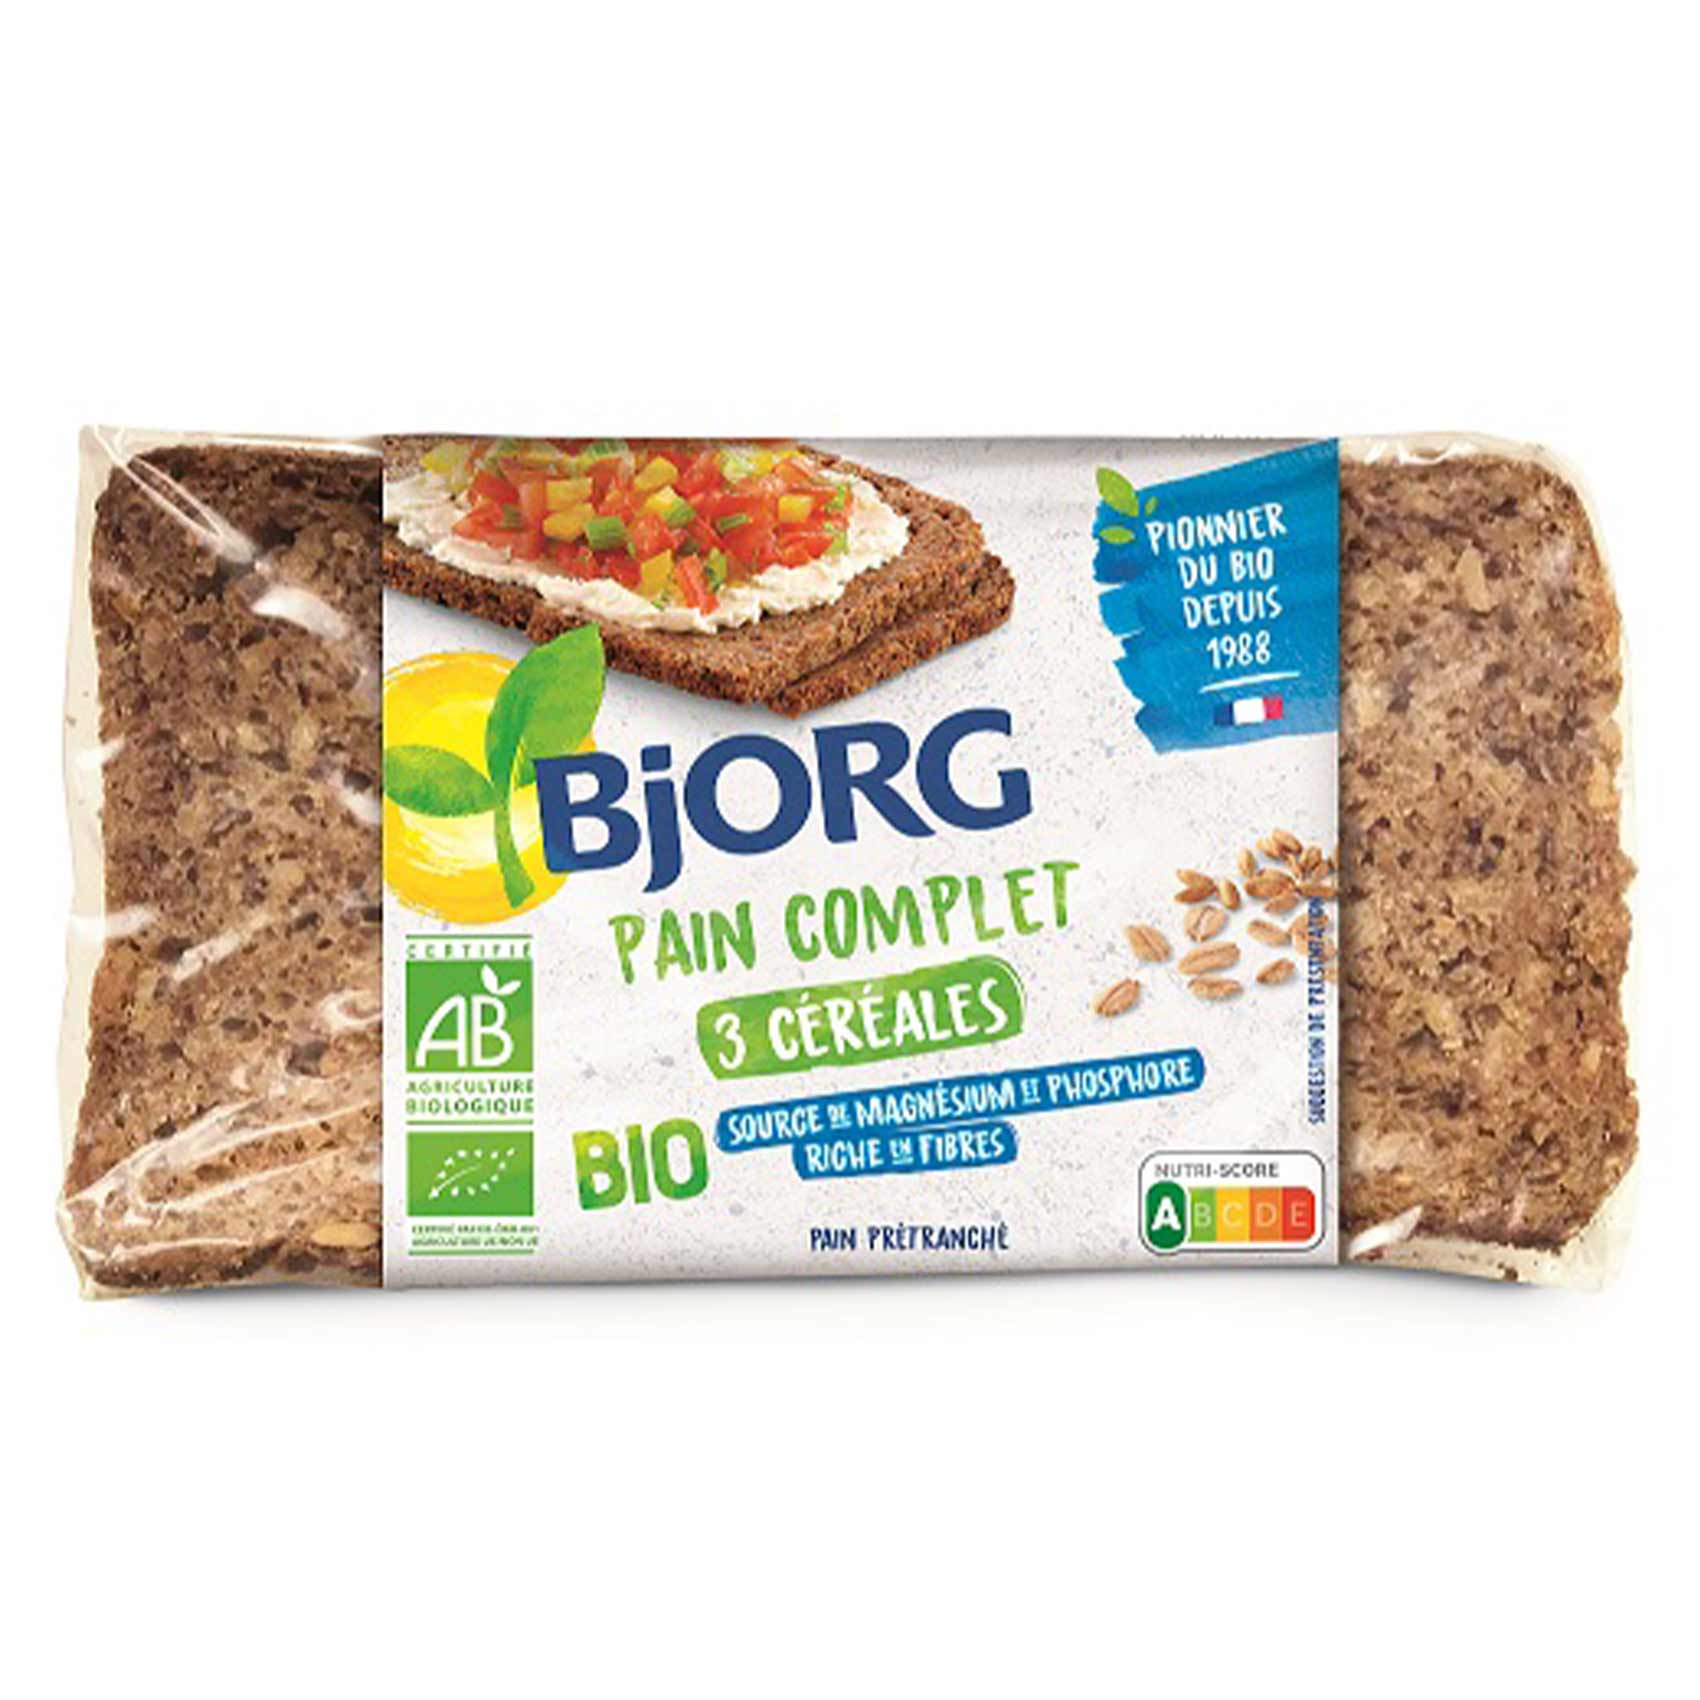 Bjorg Pain Complet 3 Cereales Bio 500GR